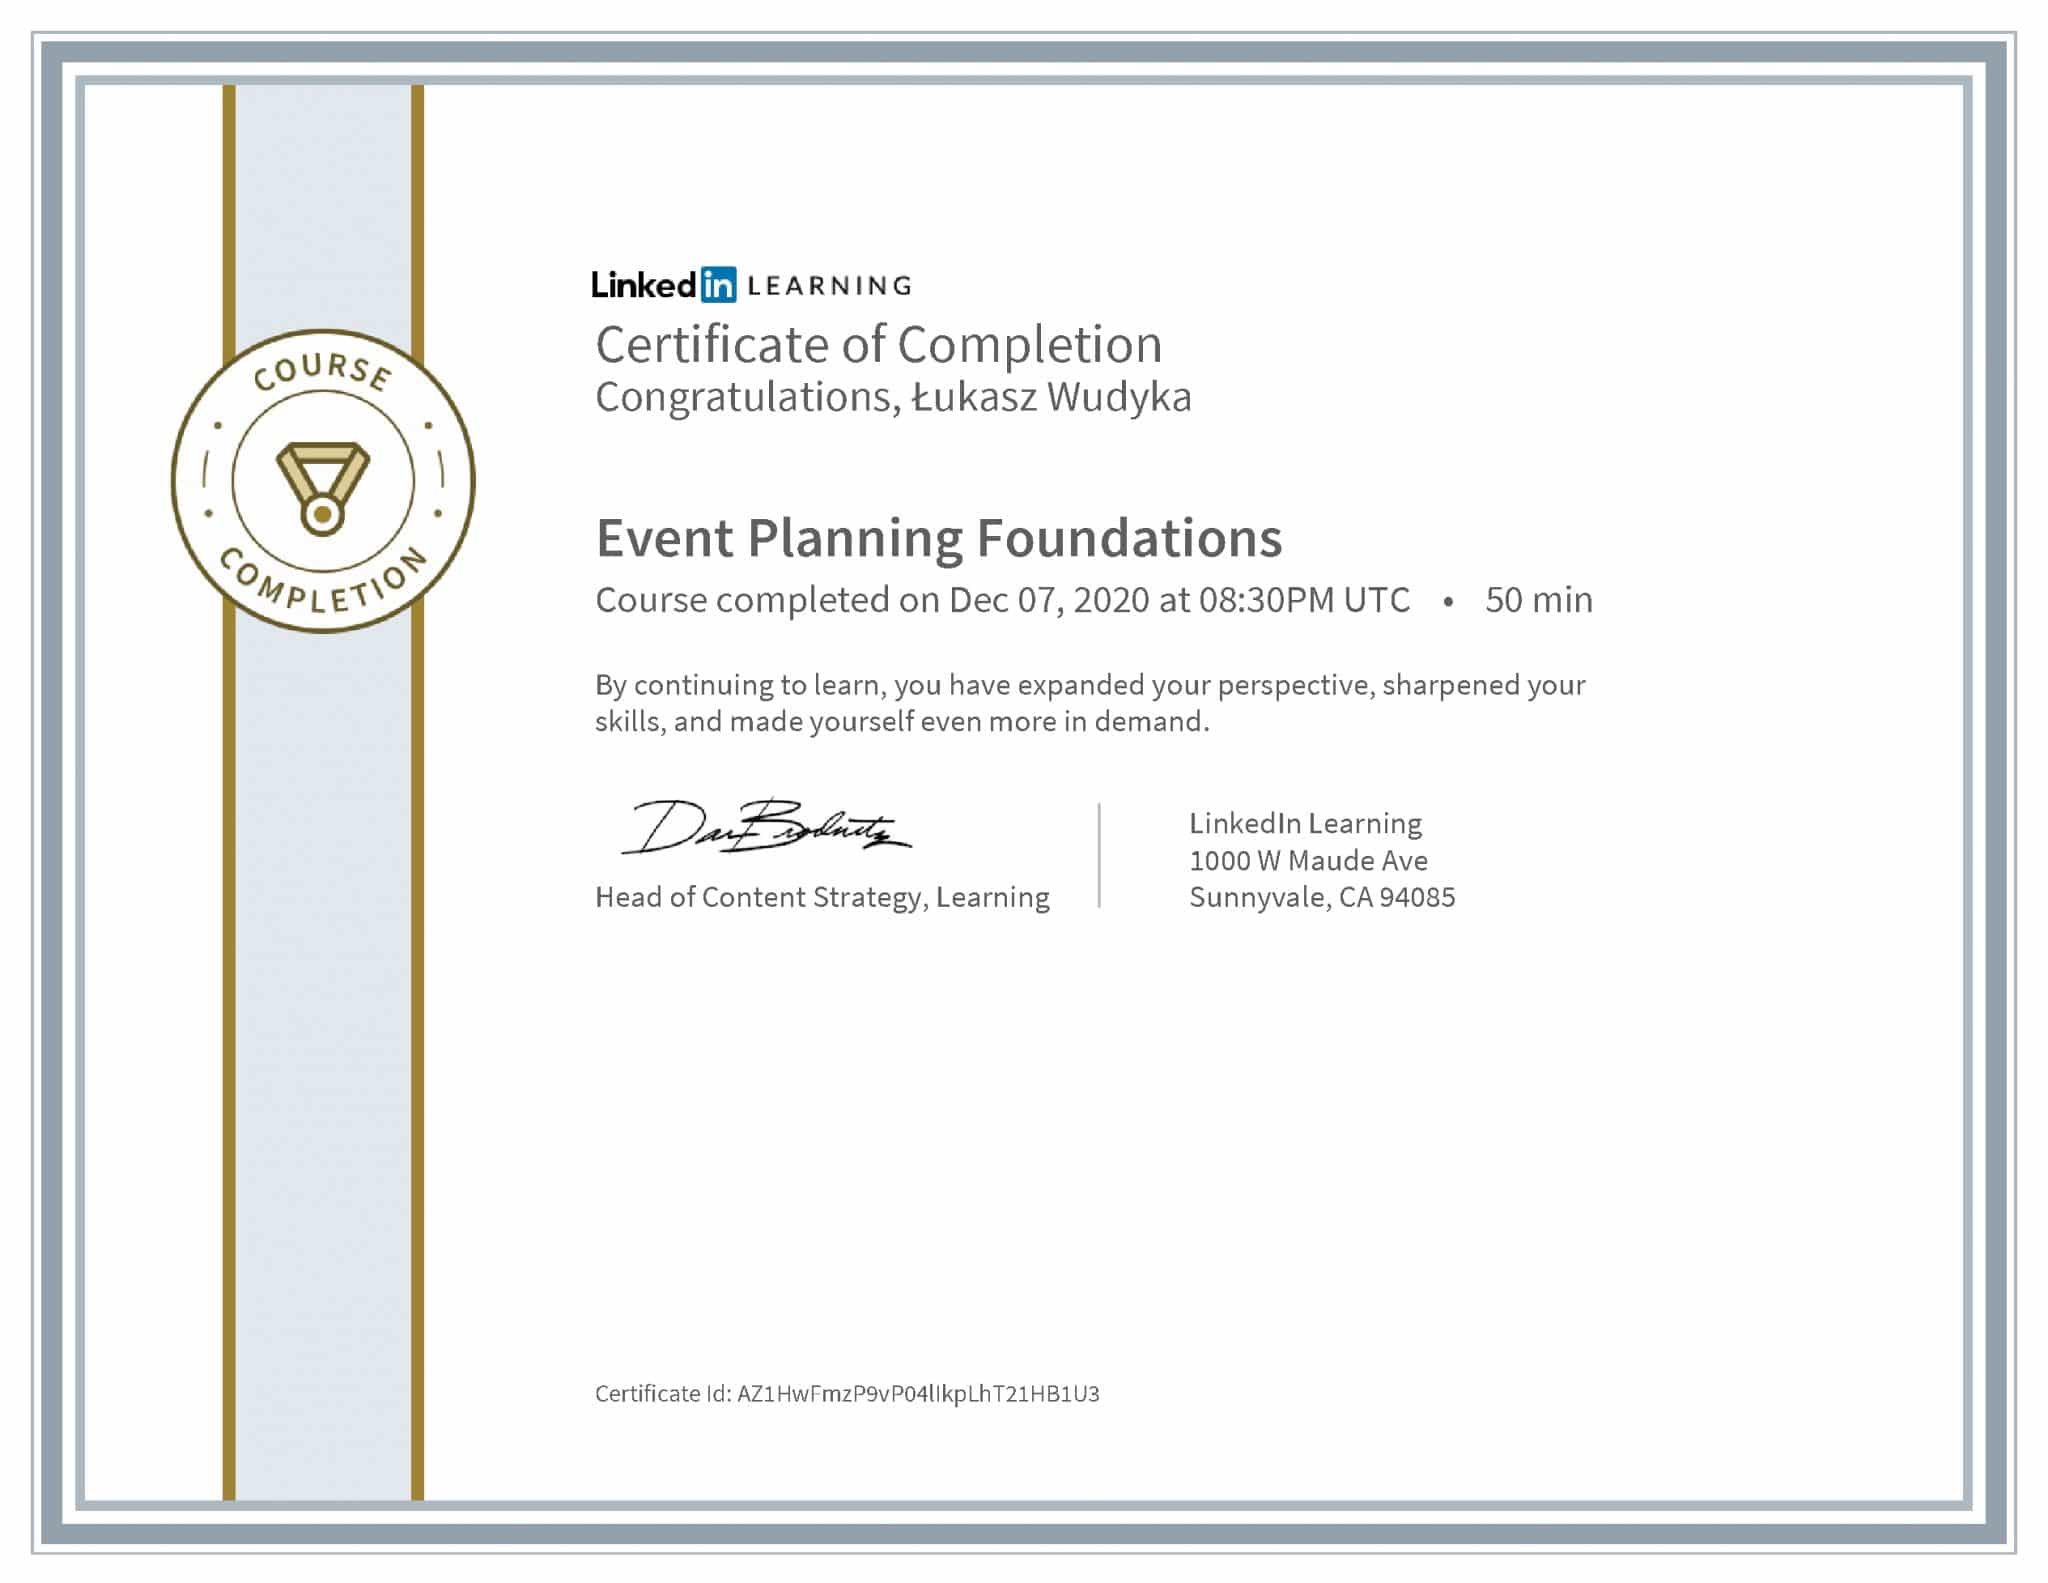 Łukasz Wudyka certyfikat LinkedIn Event Planning Foundations